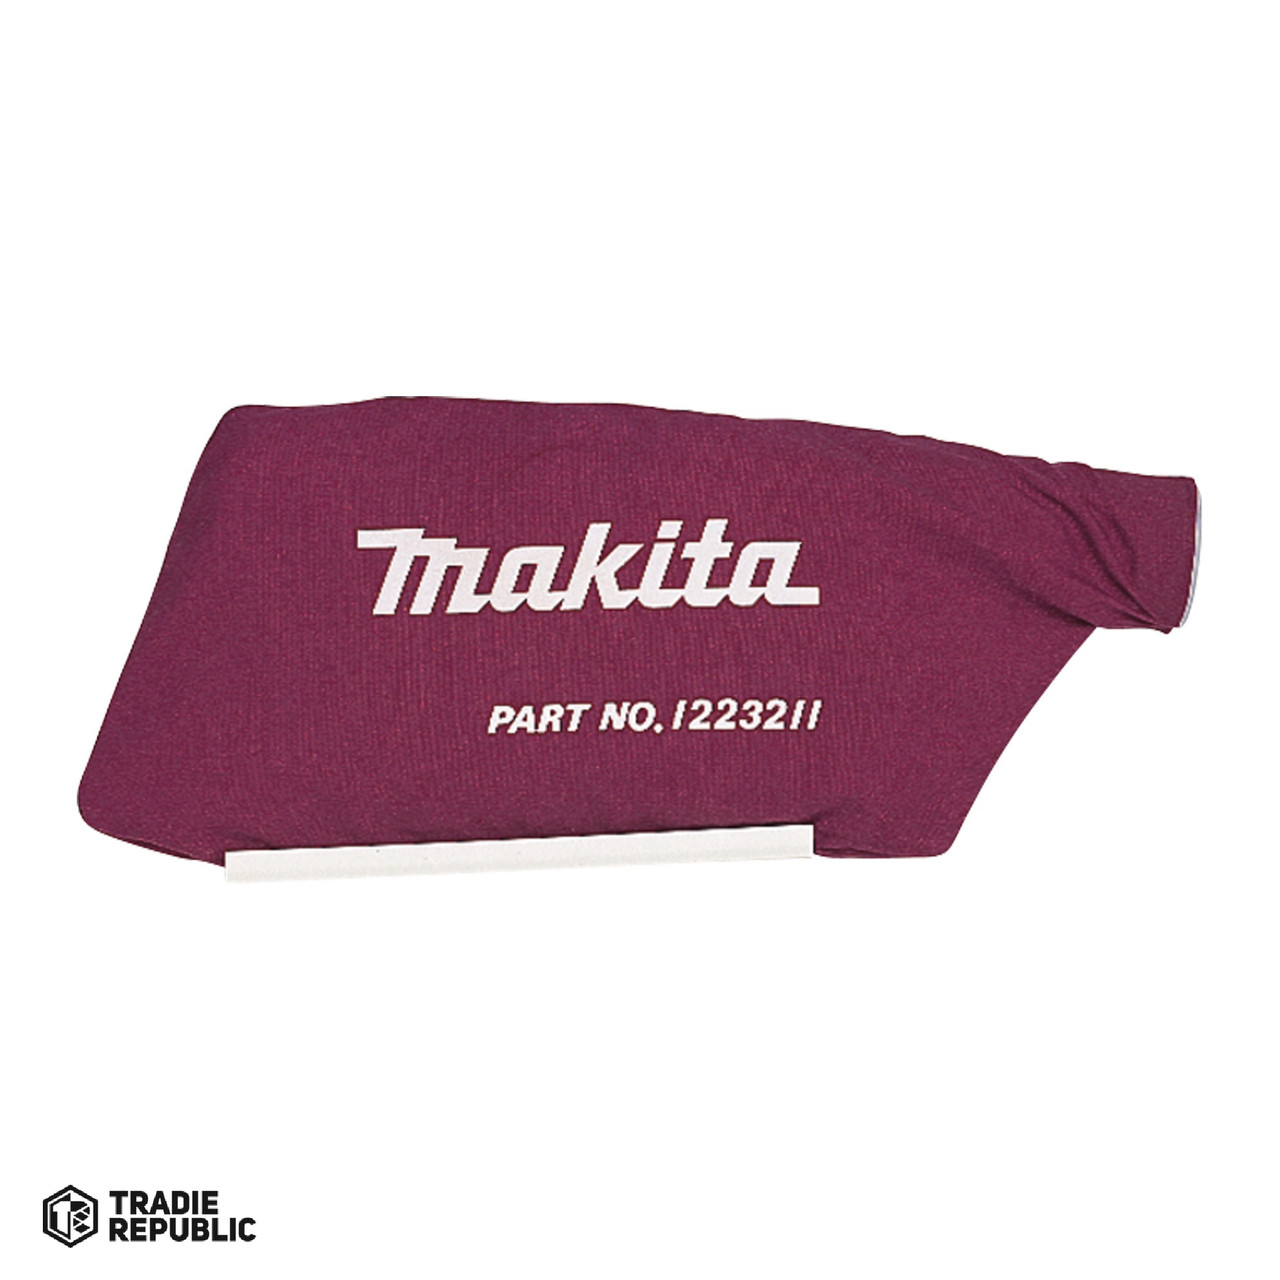 122297-2 Makita Dust Bag for 9401